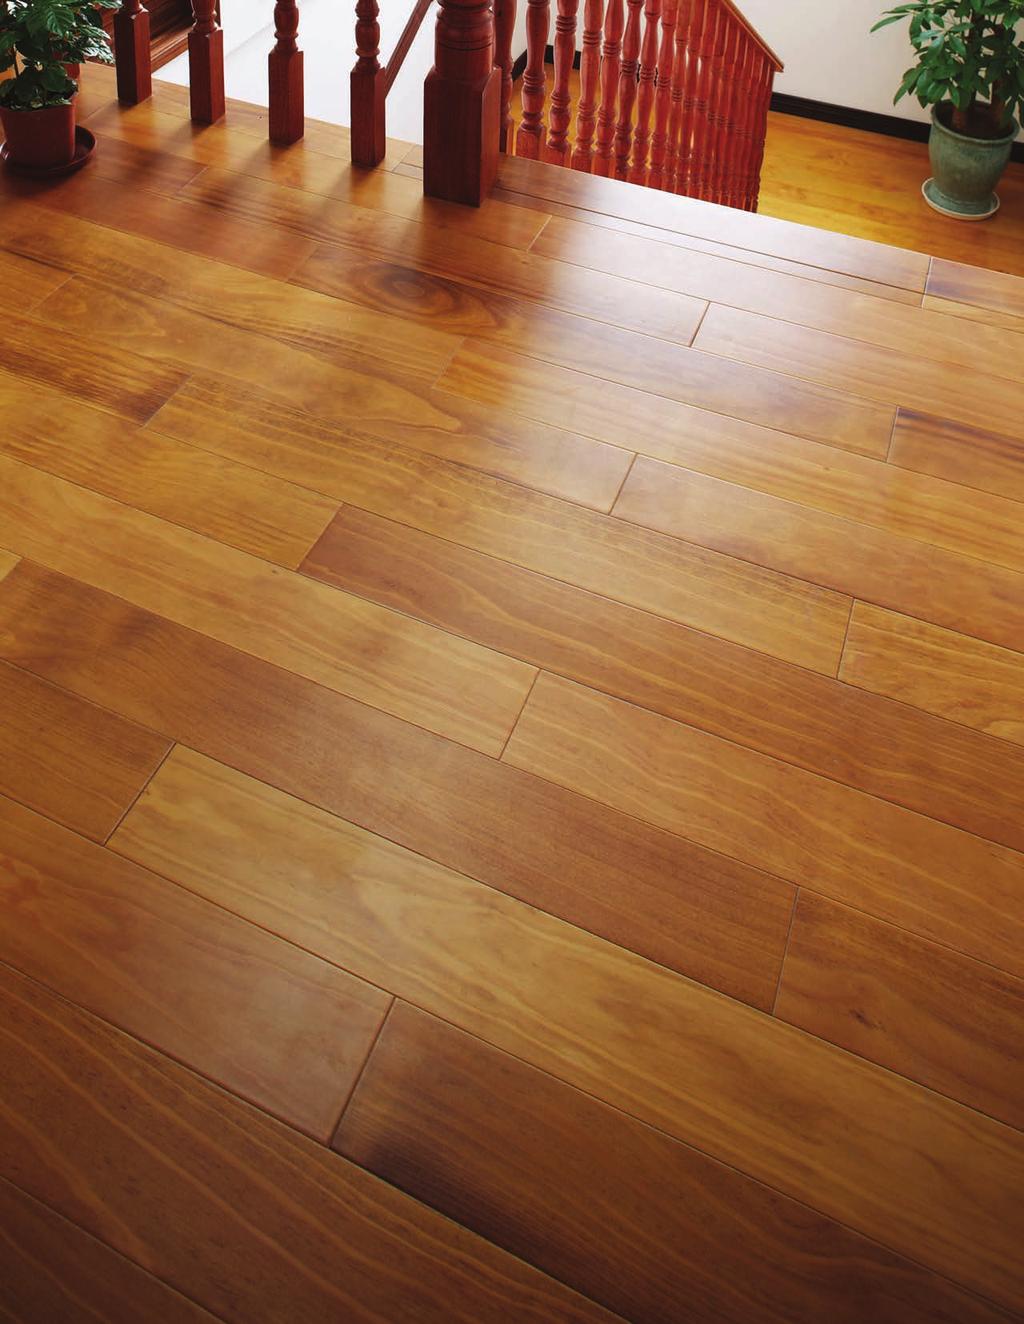 Everything about GreenbioWood Hardwood Flooring is inspiring.